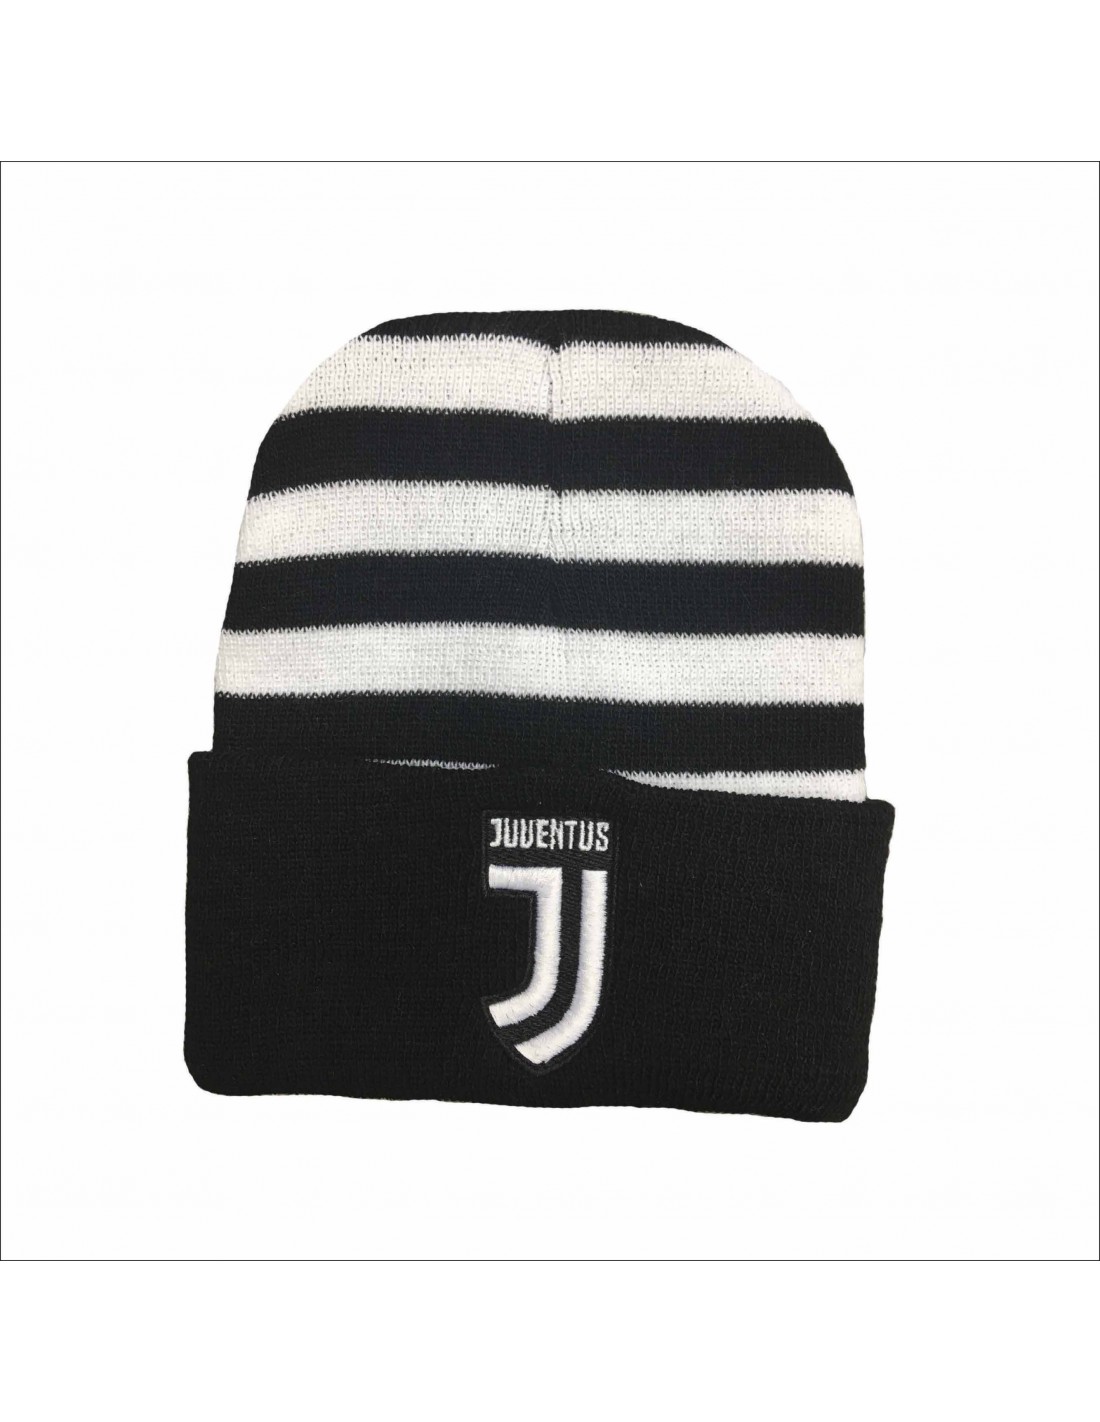 Cappello Juventus Beanie in Acrilico Striscie Bianco Nero con Logo Bianco